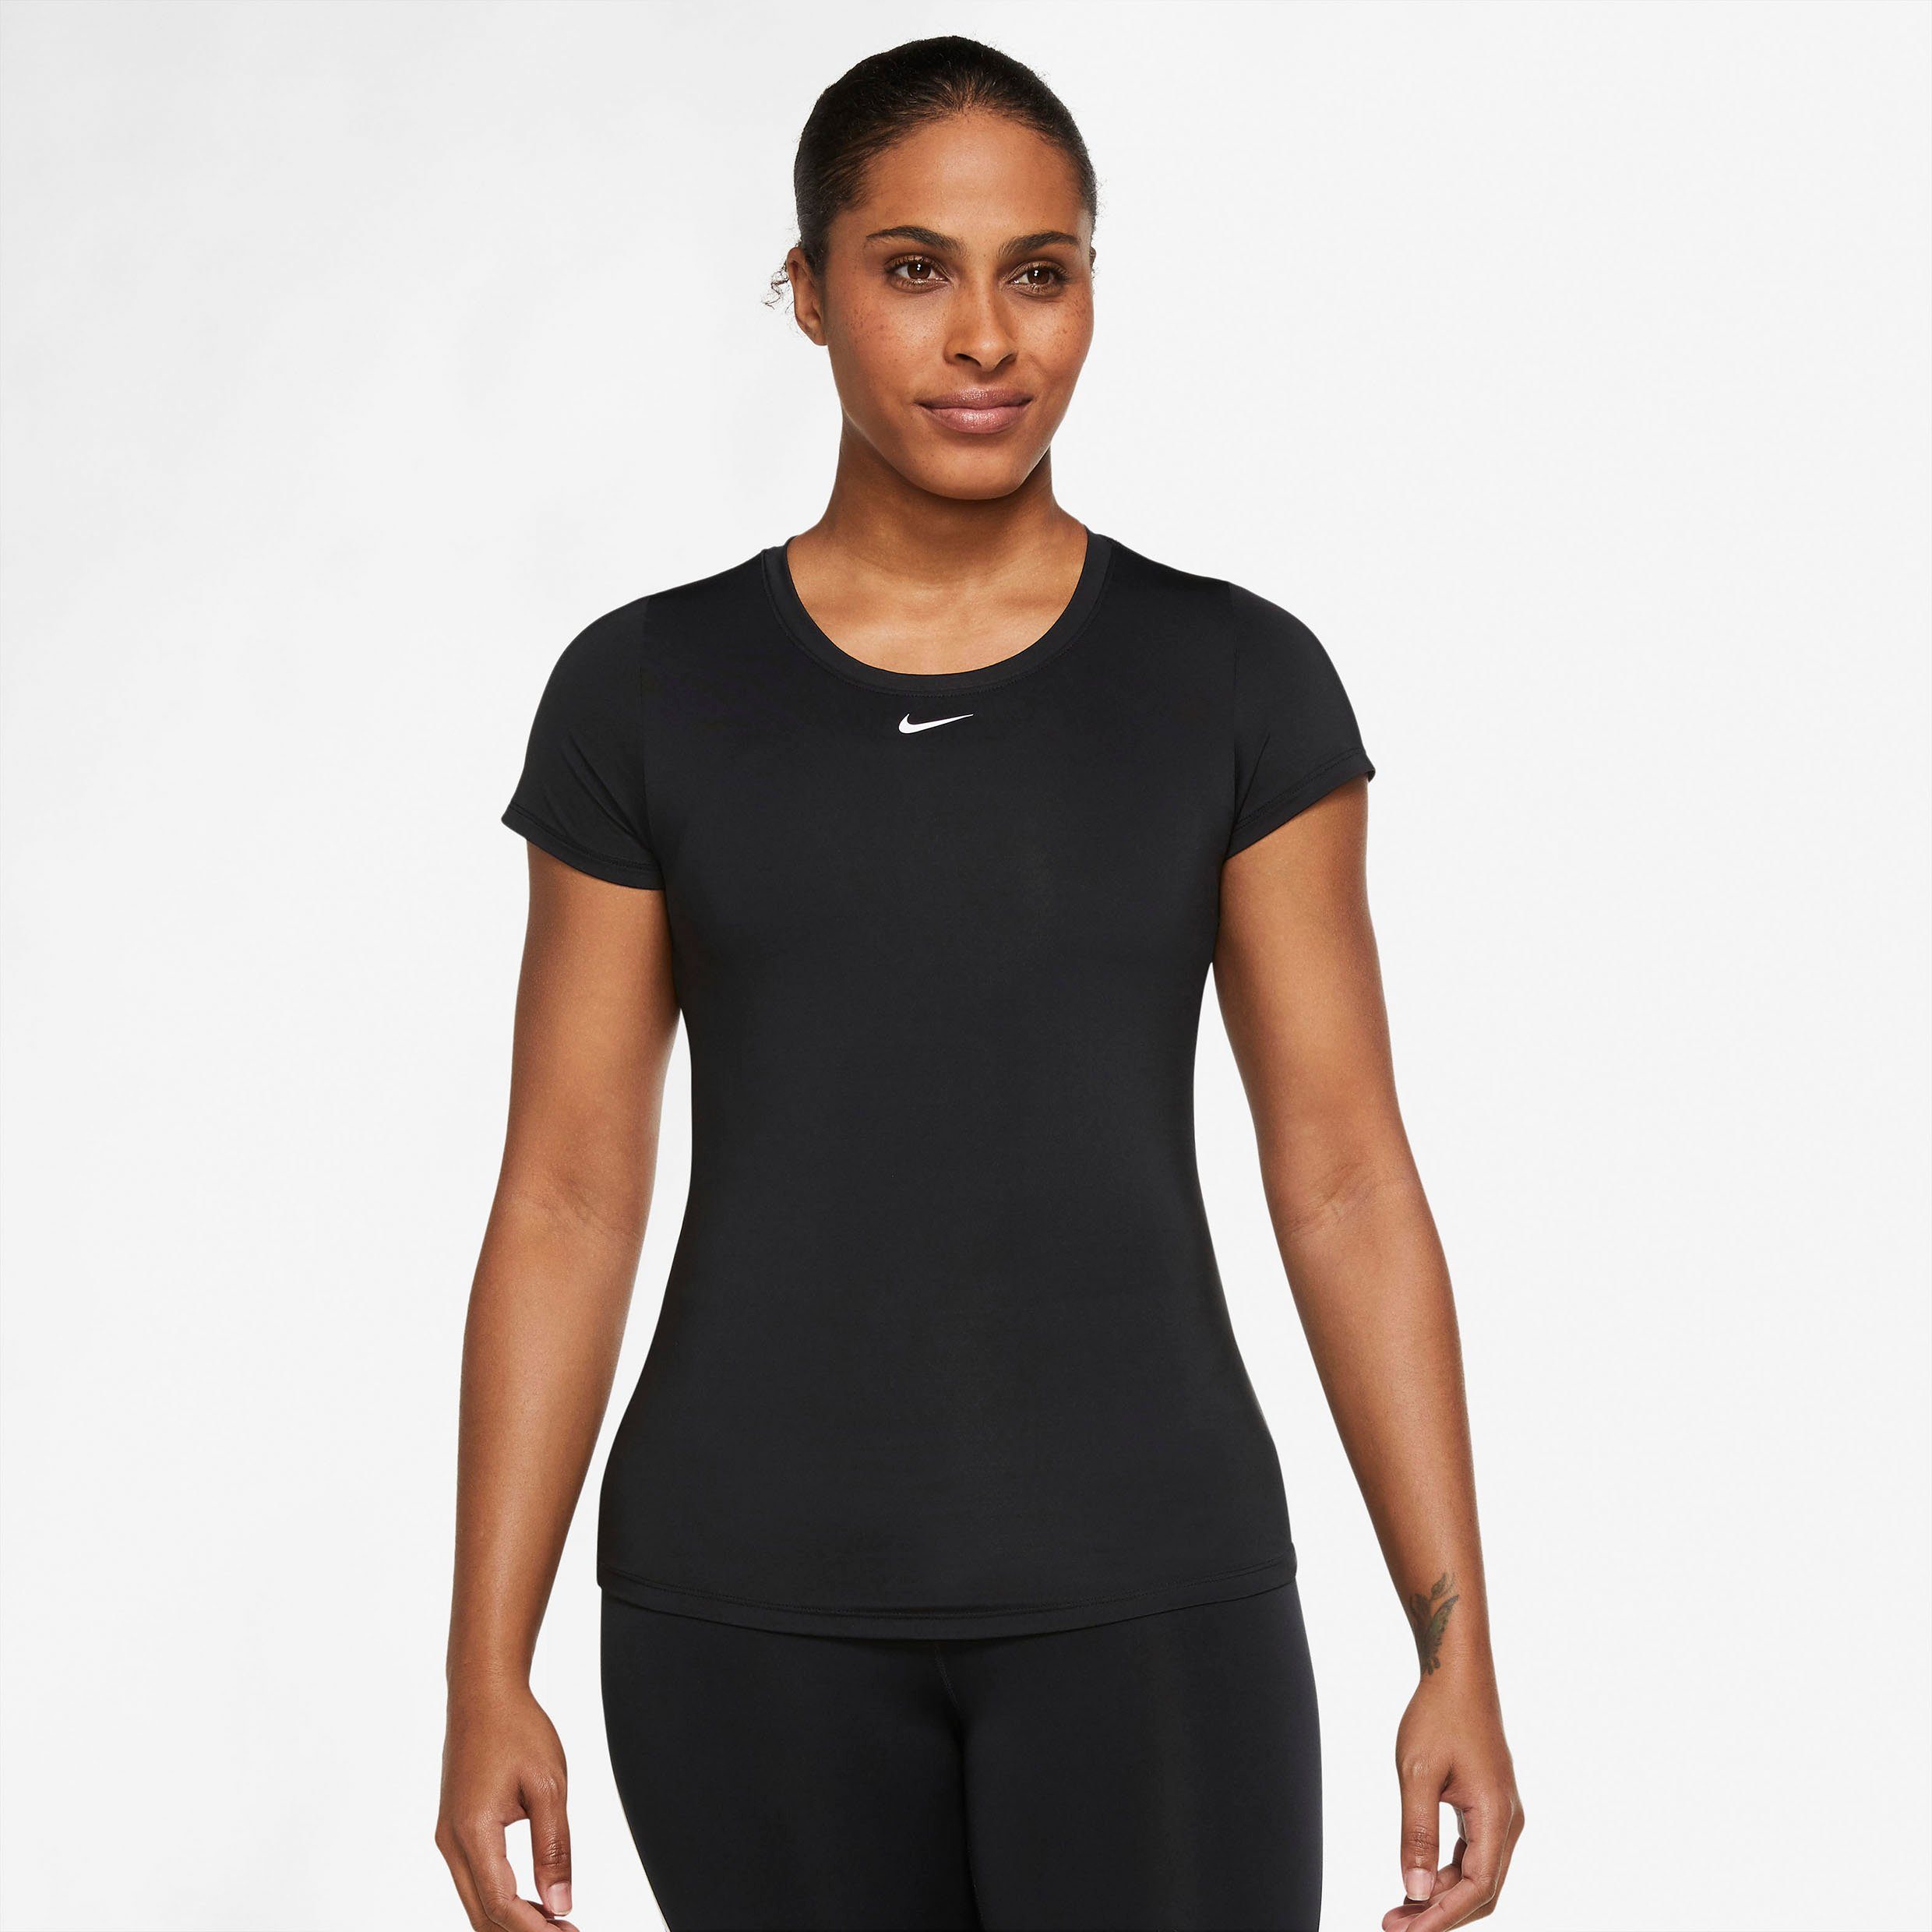 schwarz SLIM FIT SHORT-SLEEVE ONE TOP Trainingsshirt WOMEN'S DRI-FIT Nike